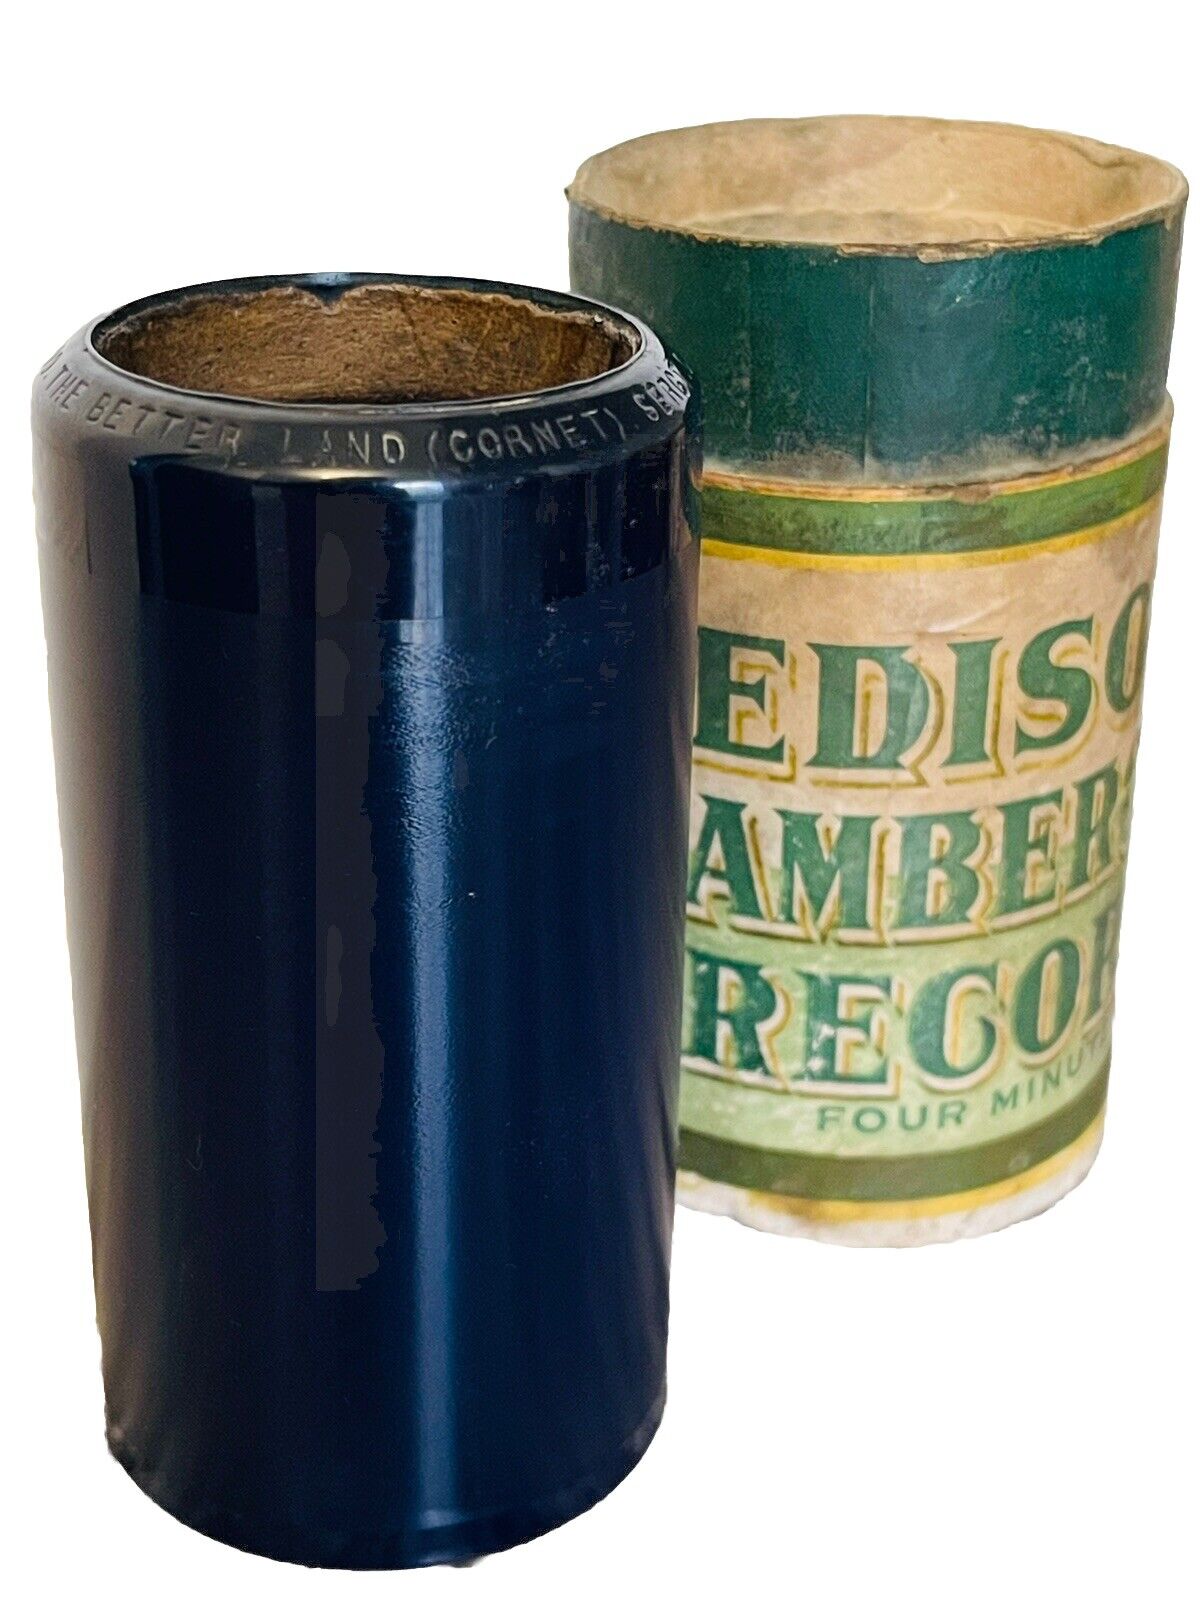 Edison Cylinder Record Blue Amberol 23200 (British Series) -  Sergeant C. Legget